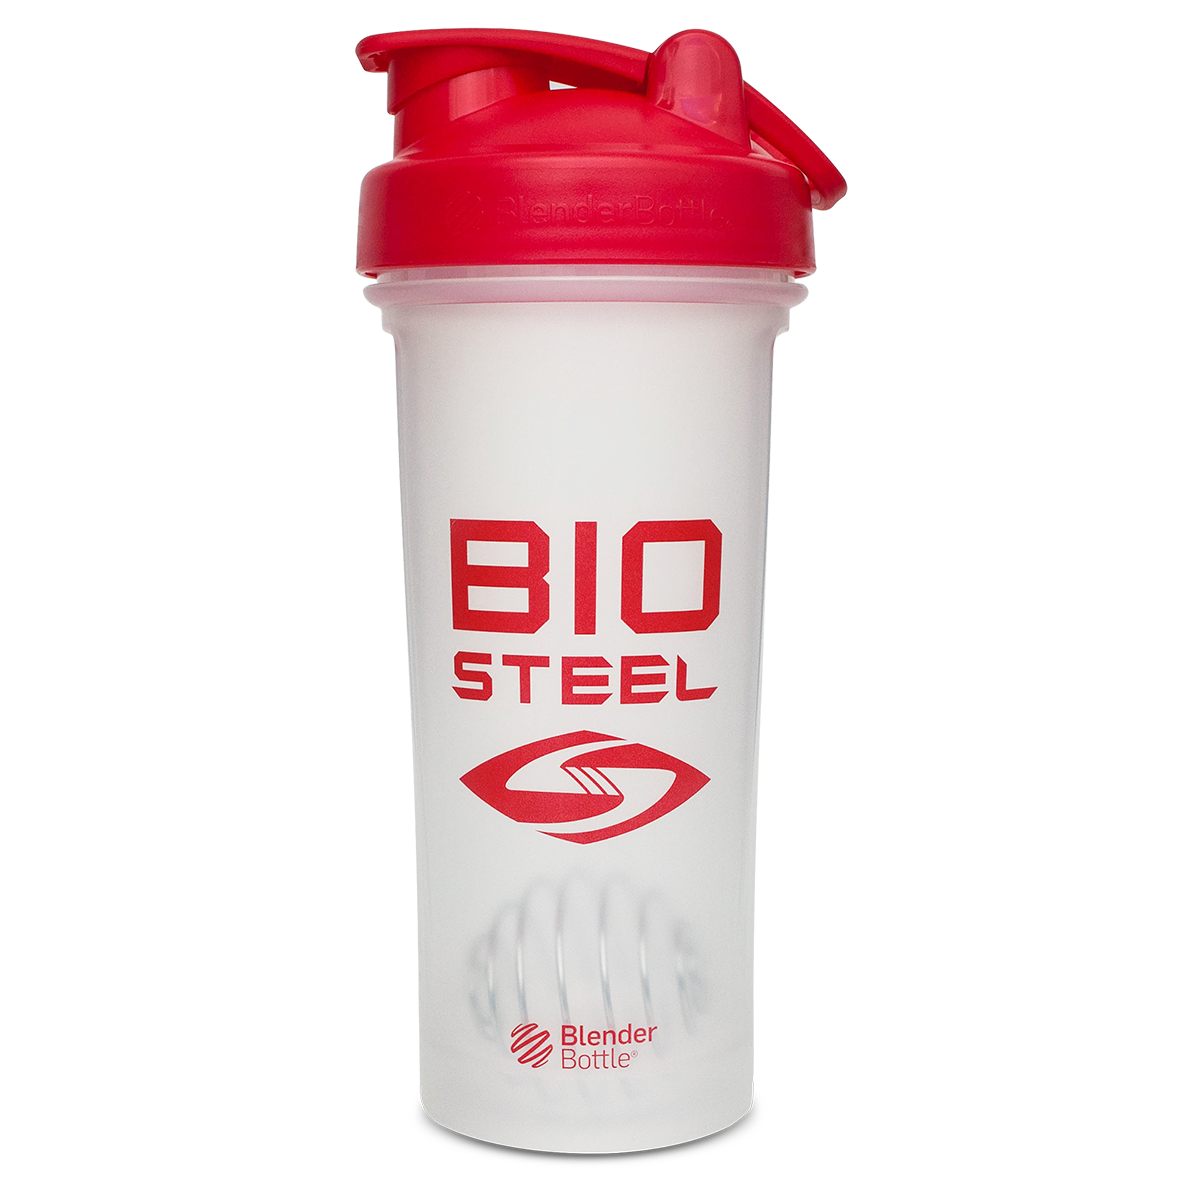 bio-steel-shaker-cup